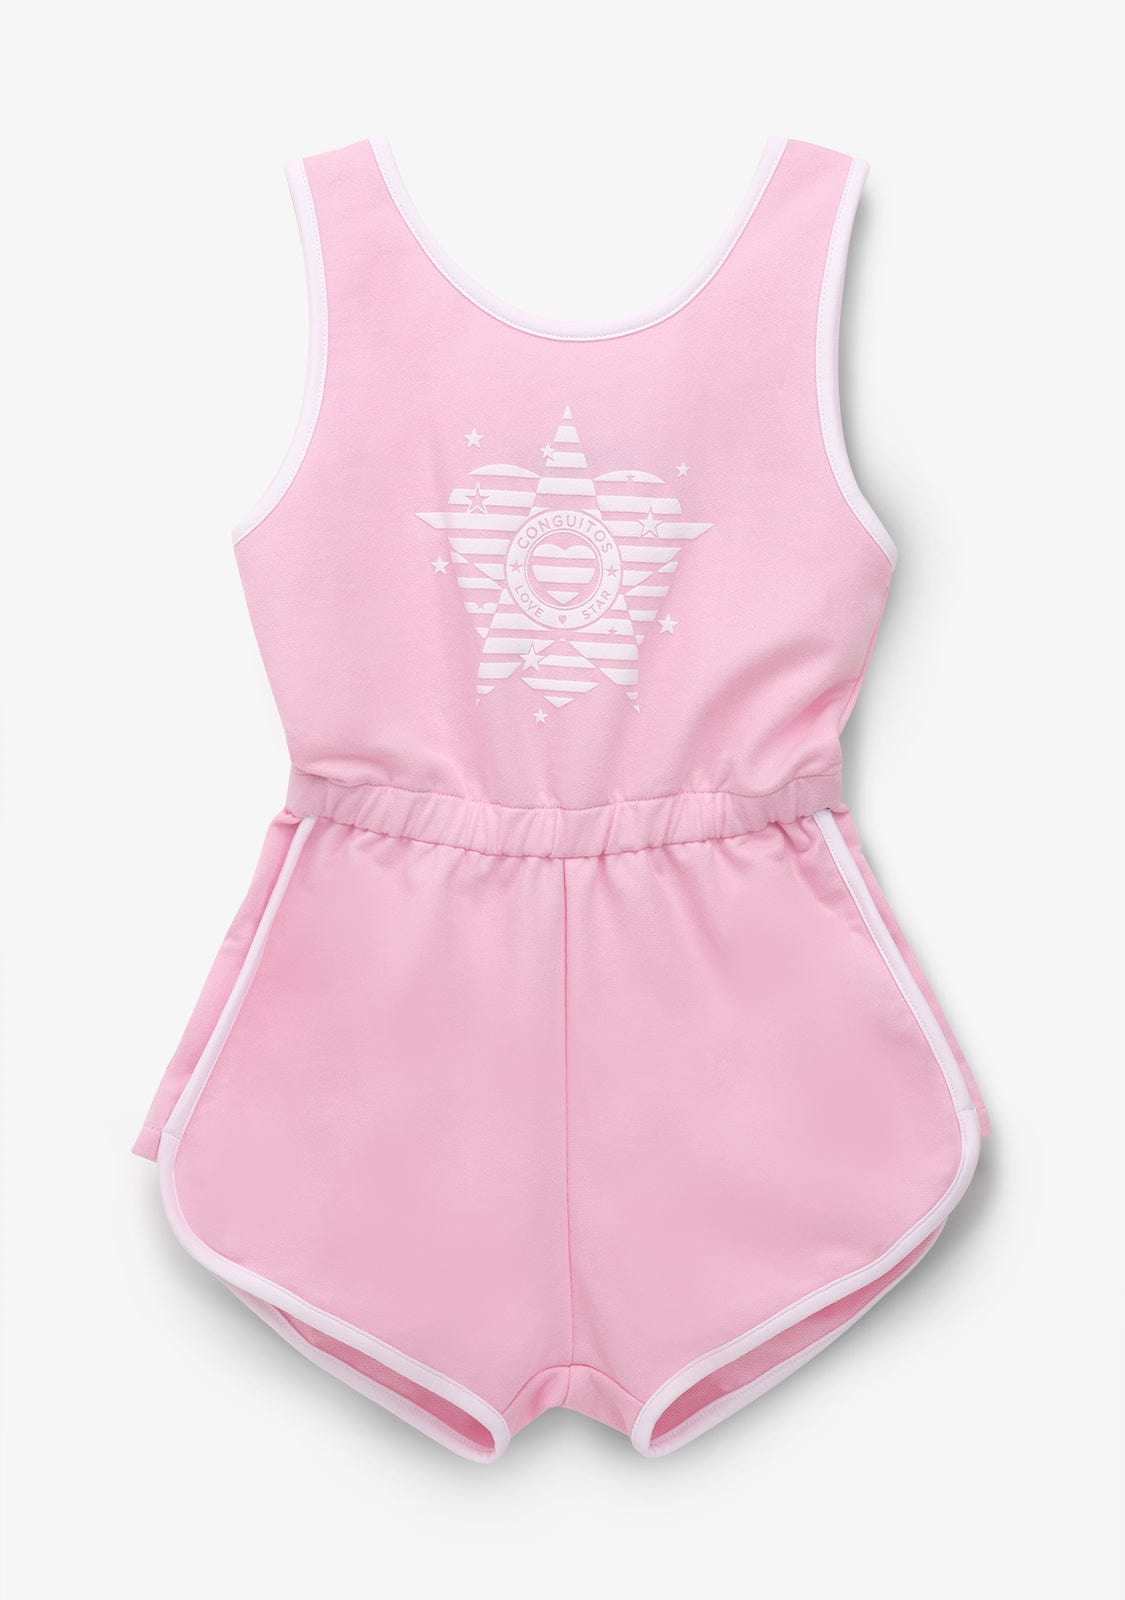 CONGUITOS TEXTIL Clothing Girl´s Pink Ribbing Plush Plain Jumpsuit